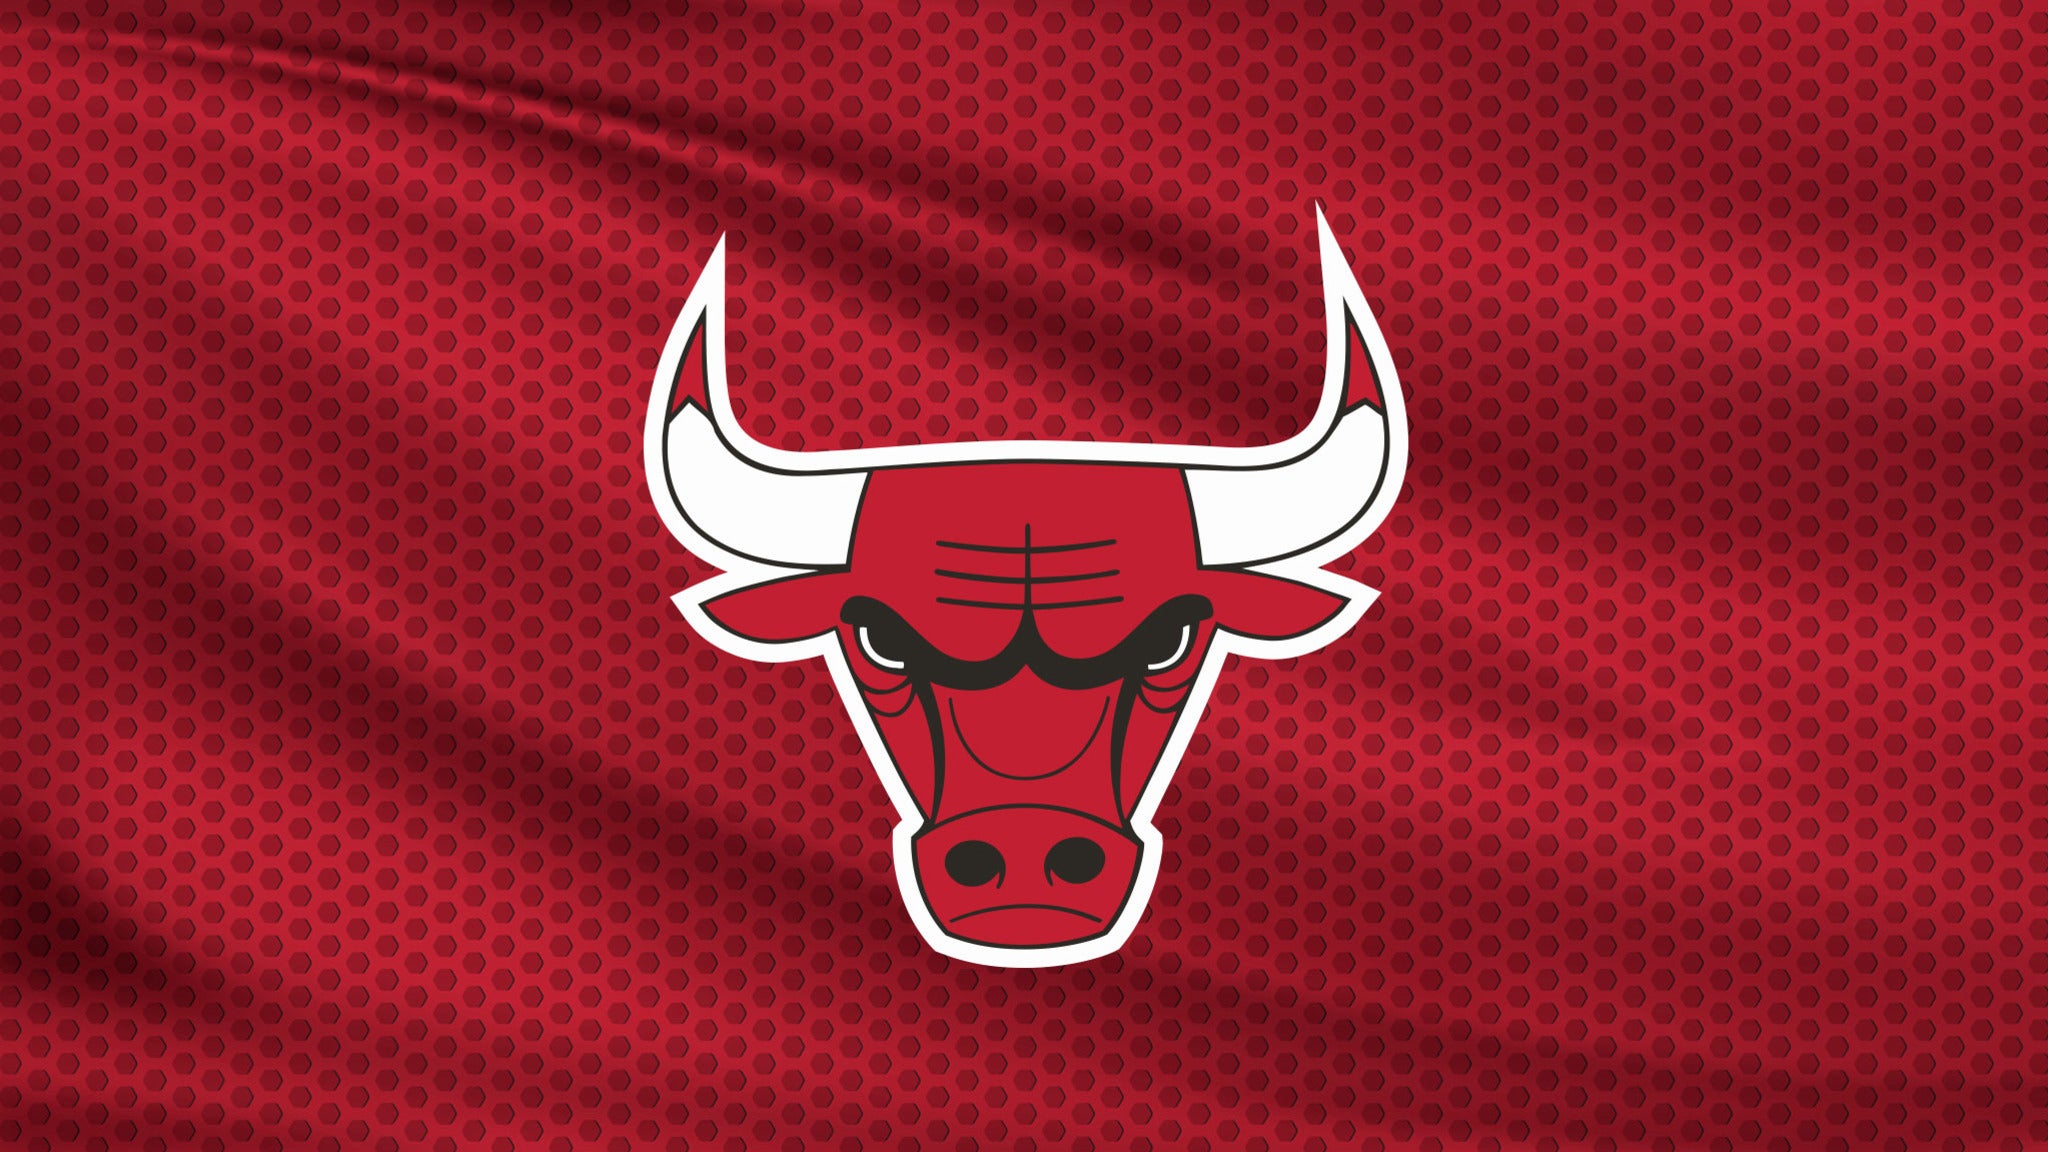 Chicago Bulls vs. San Antonio Spurs